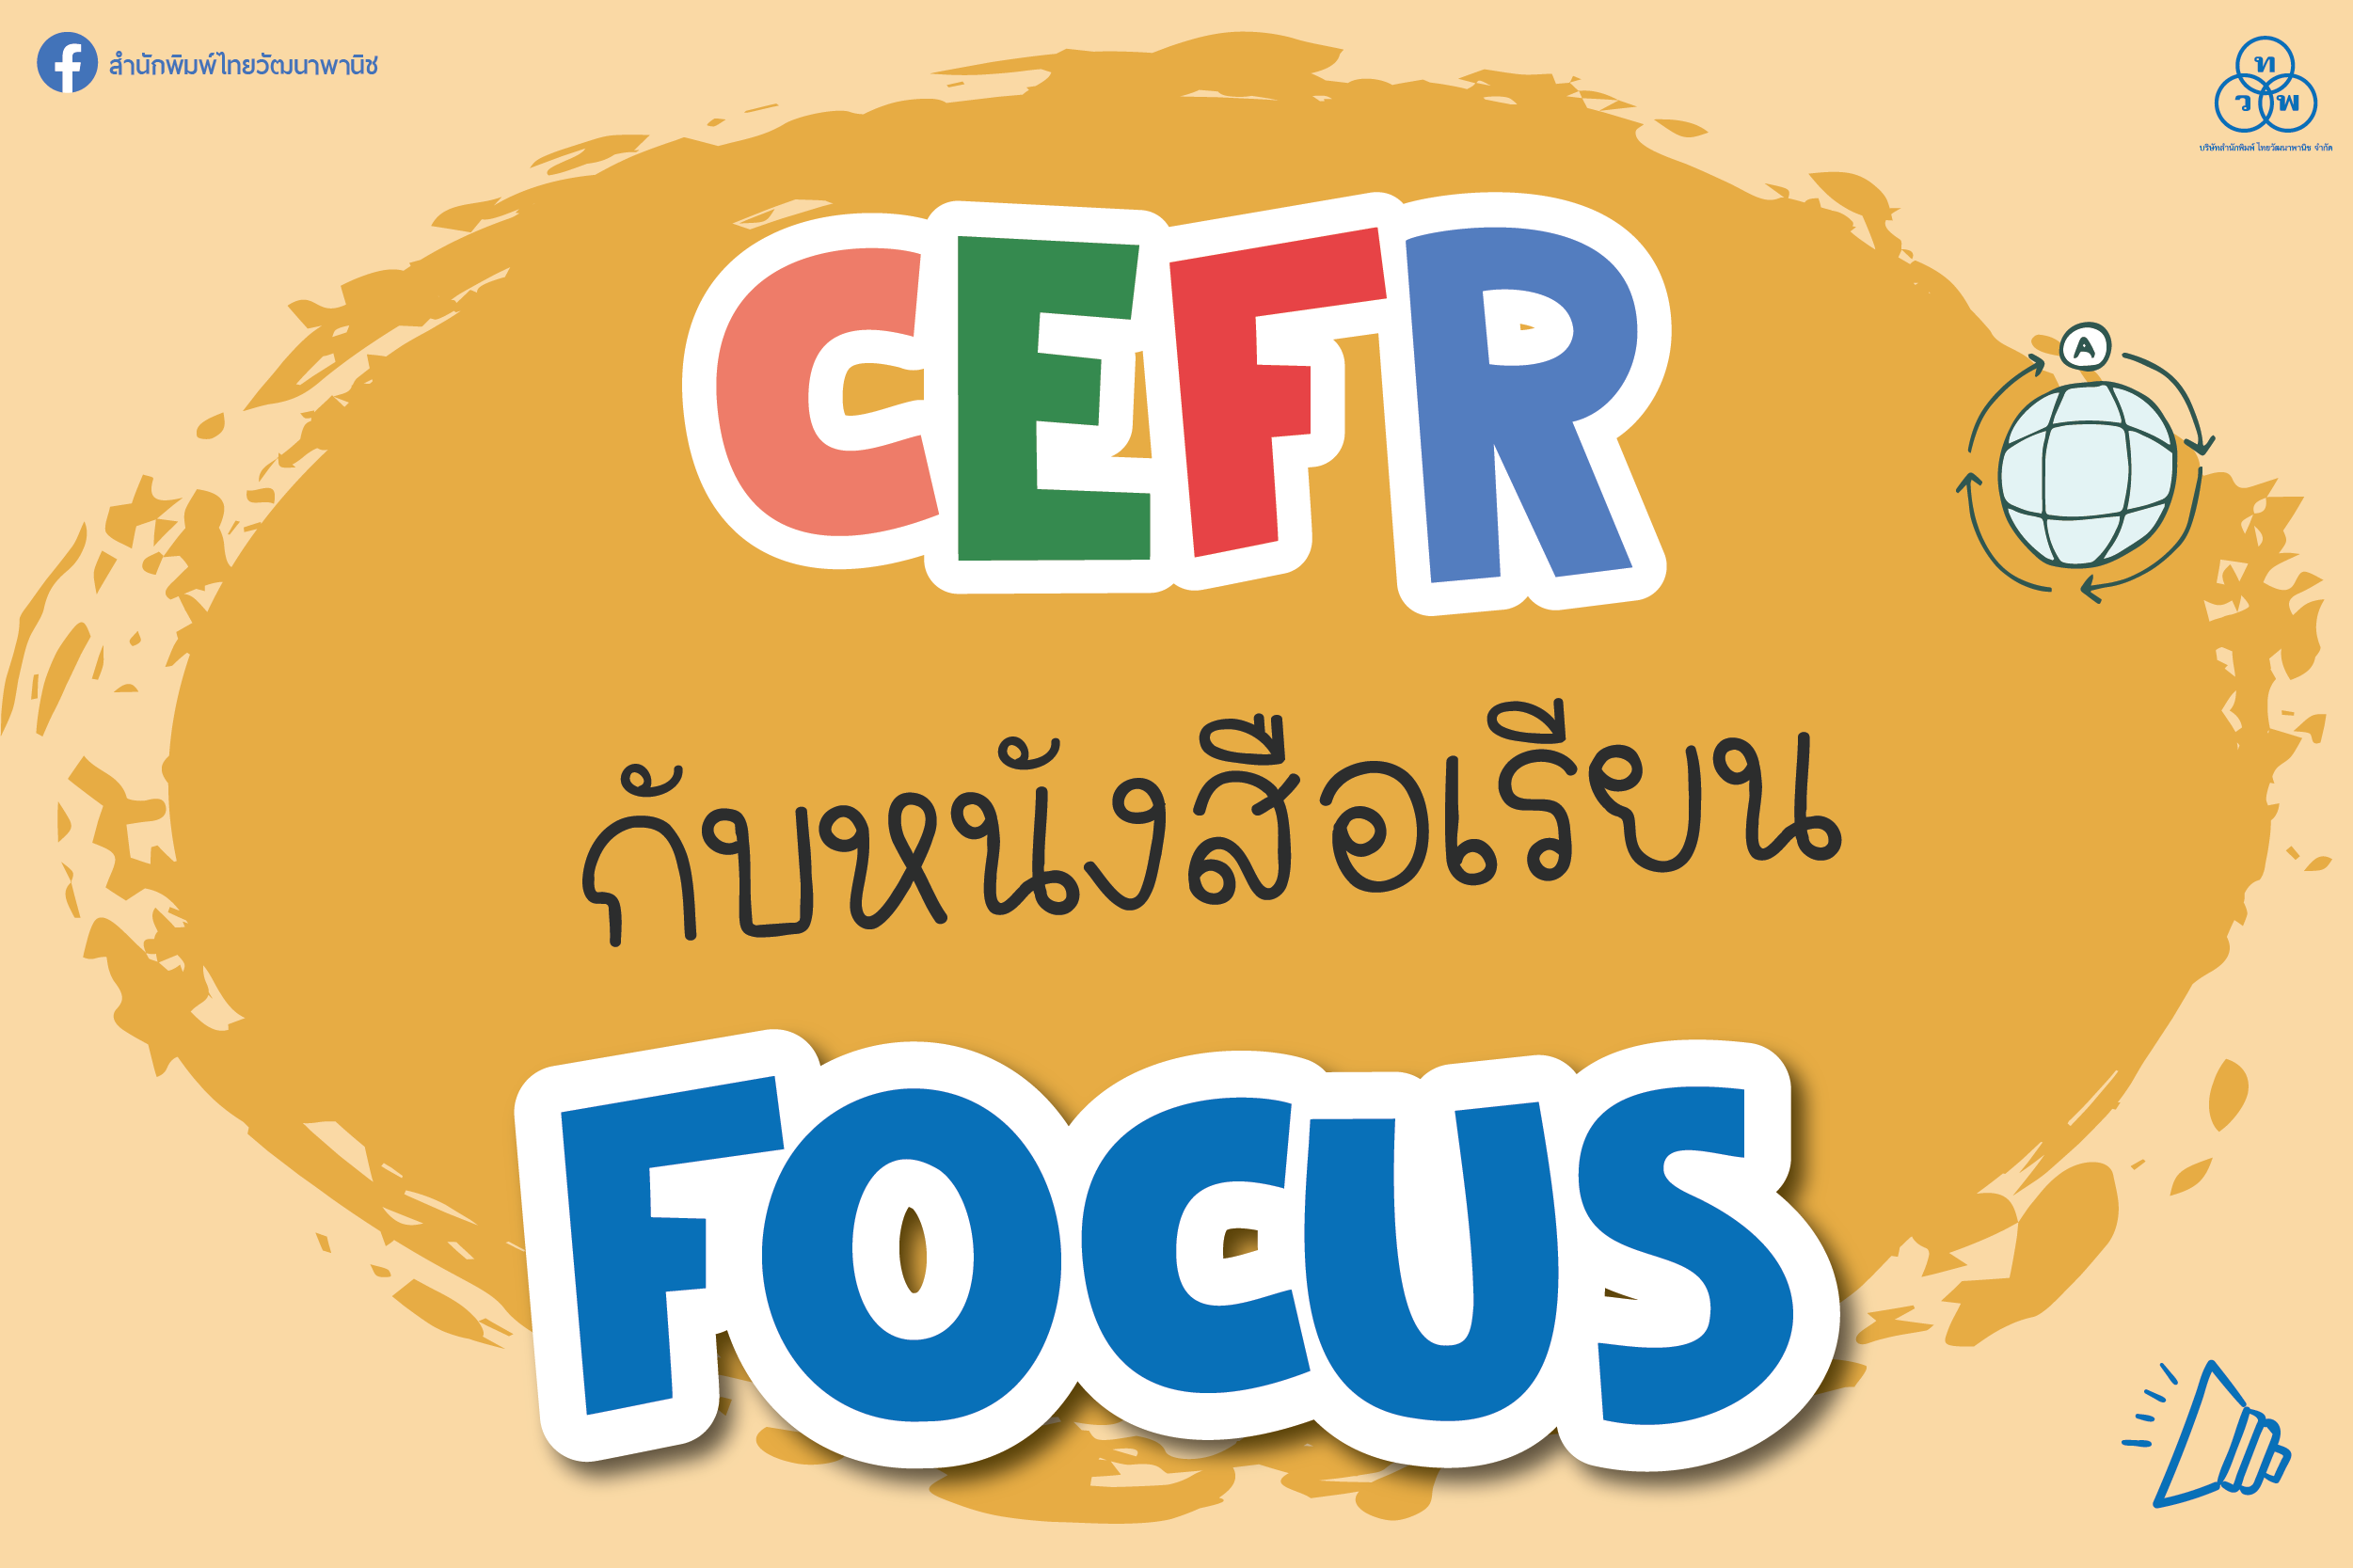 CEFR กับหนังสือเรียน FOCUS